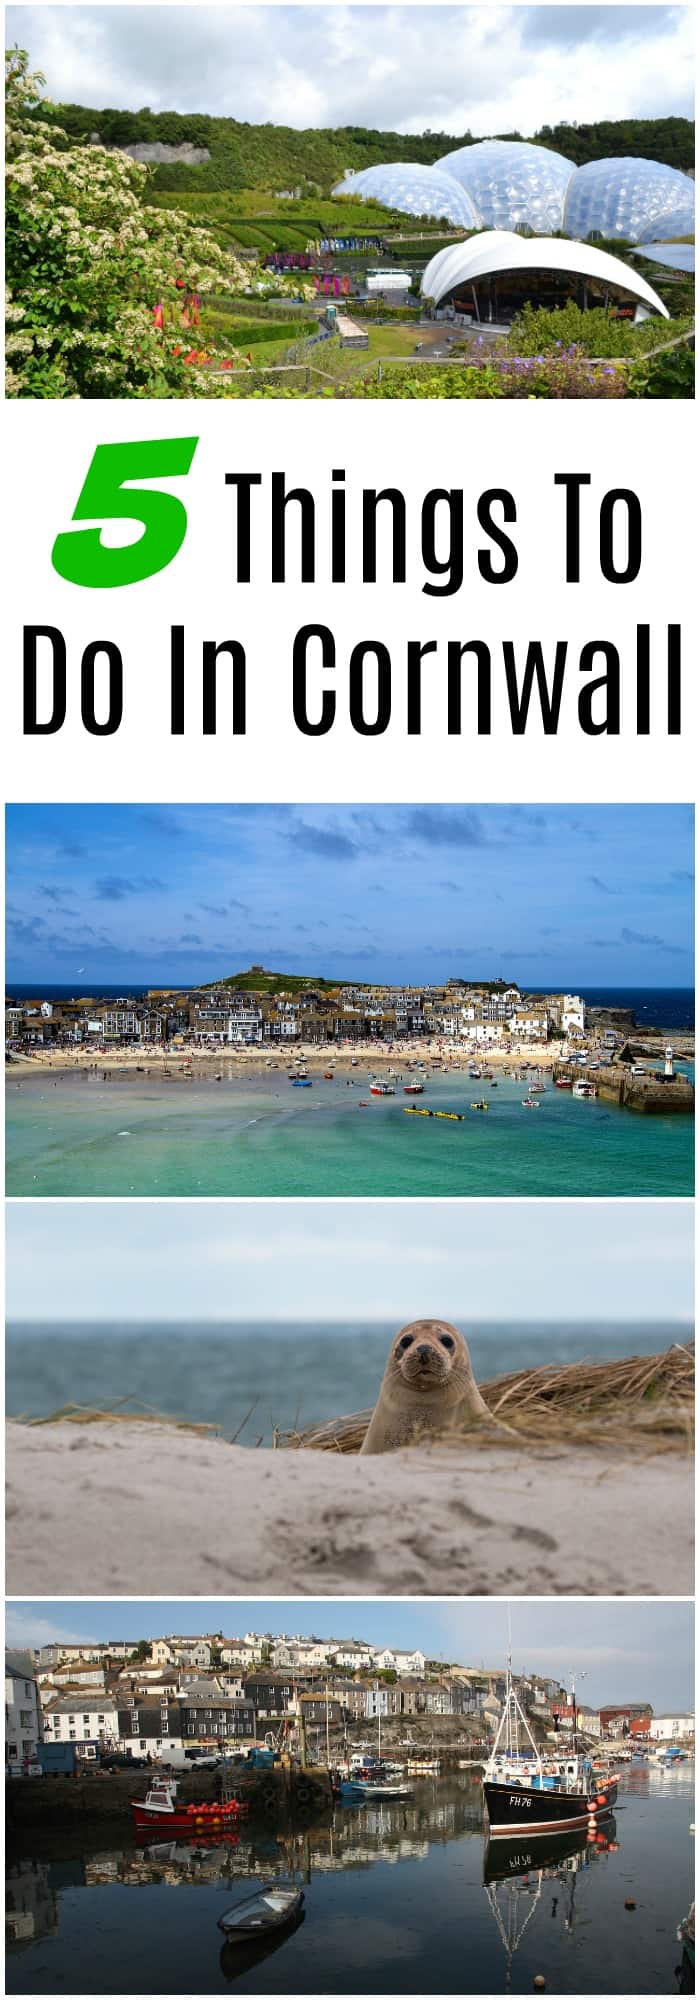 5 Things To Do In Cornwall #uktravel #cornwall #familytravel #holiday 